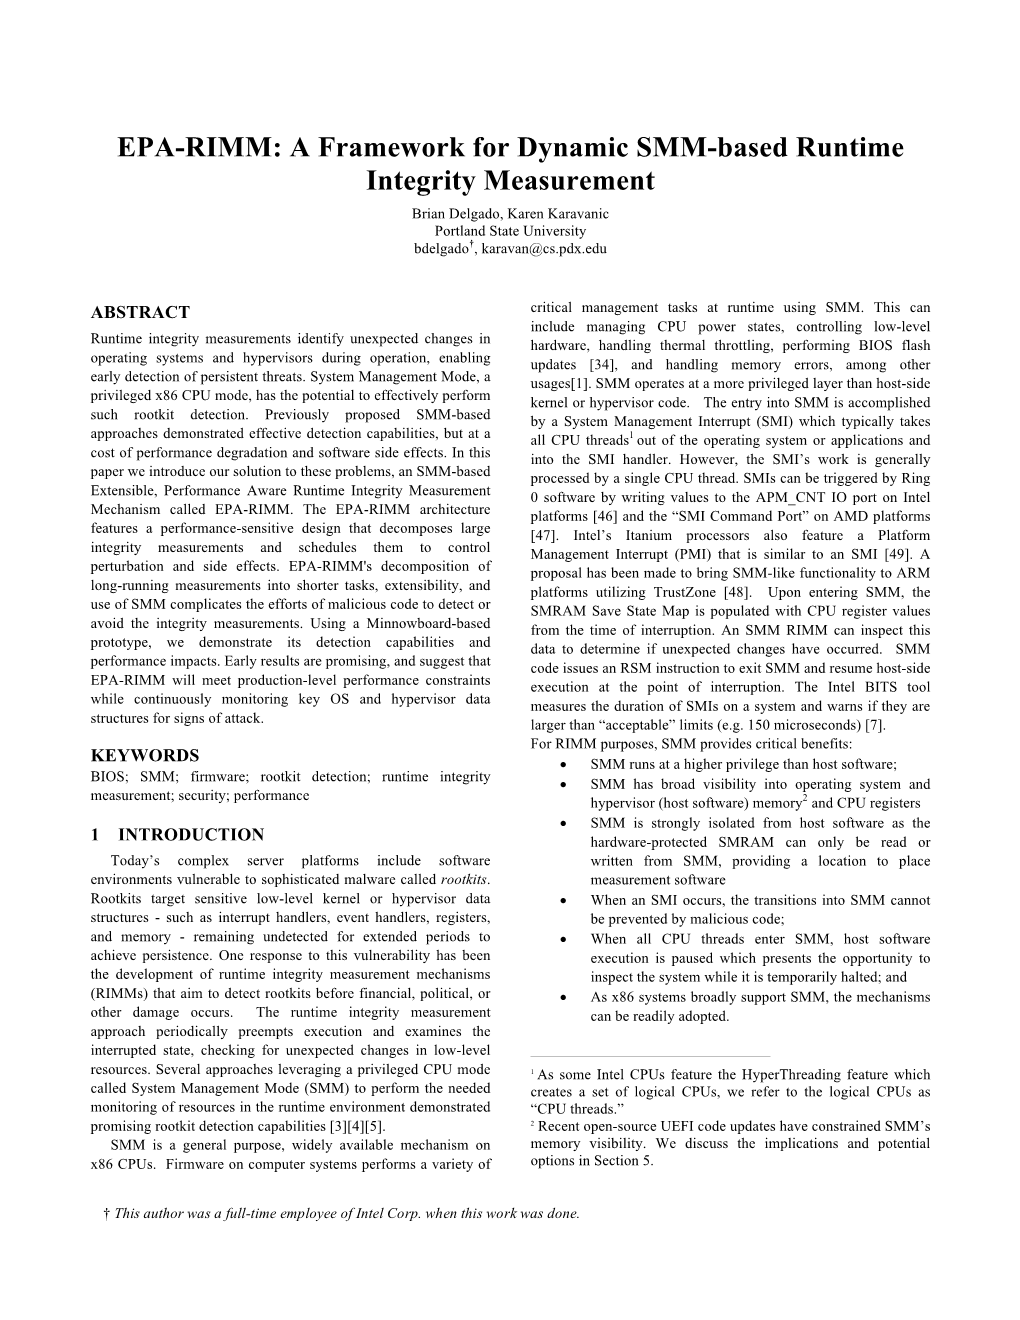 EPA-RIMM: a Framework for Dynamic SMM-Based Runtime Integrity Measurement Brian Delgado, Karen Karavanic Portland State University Bdelgado†, Karavan@Cs.Pdx.Edu